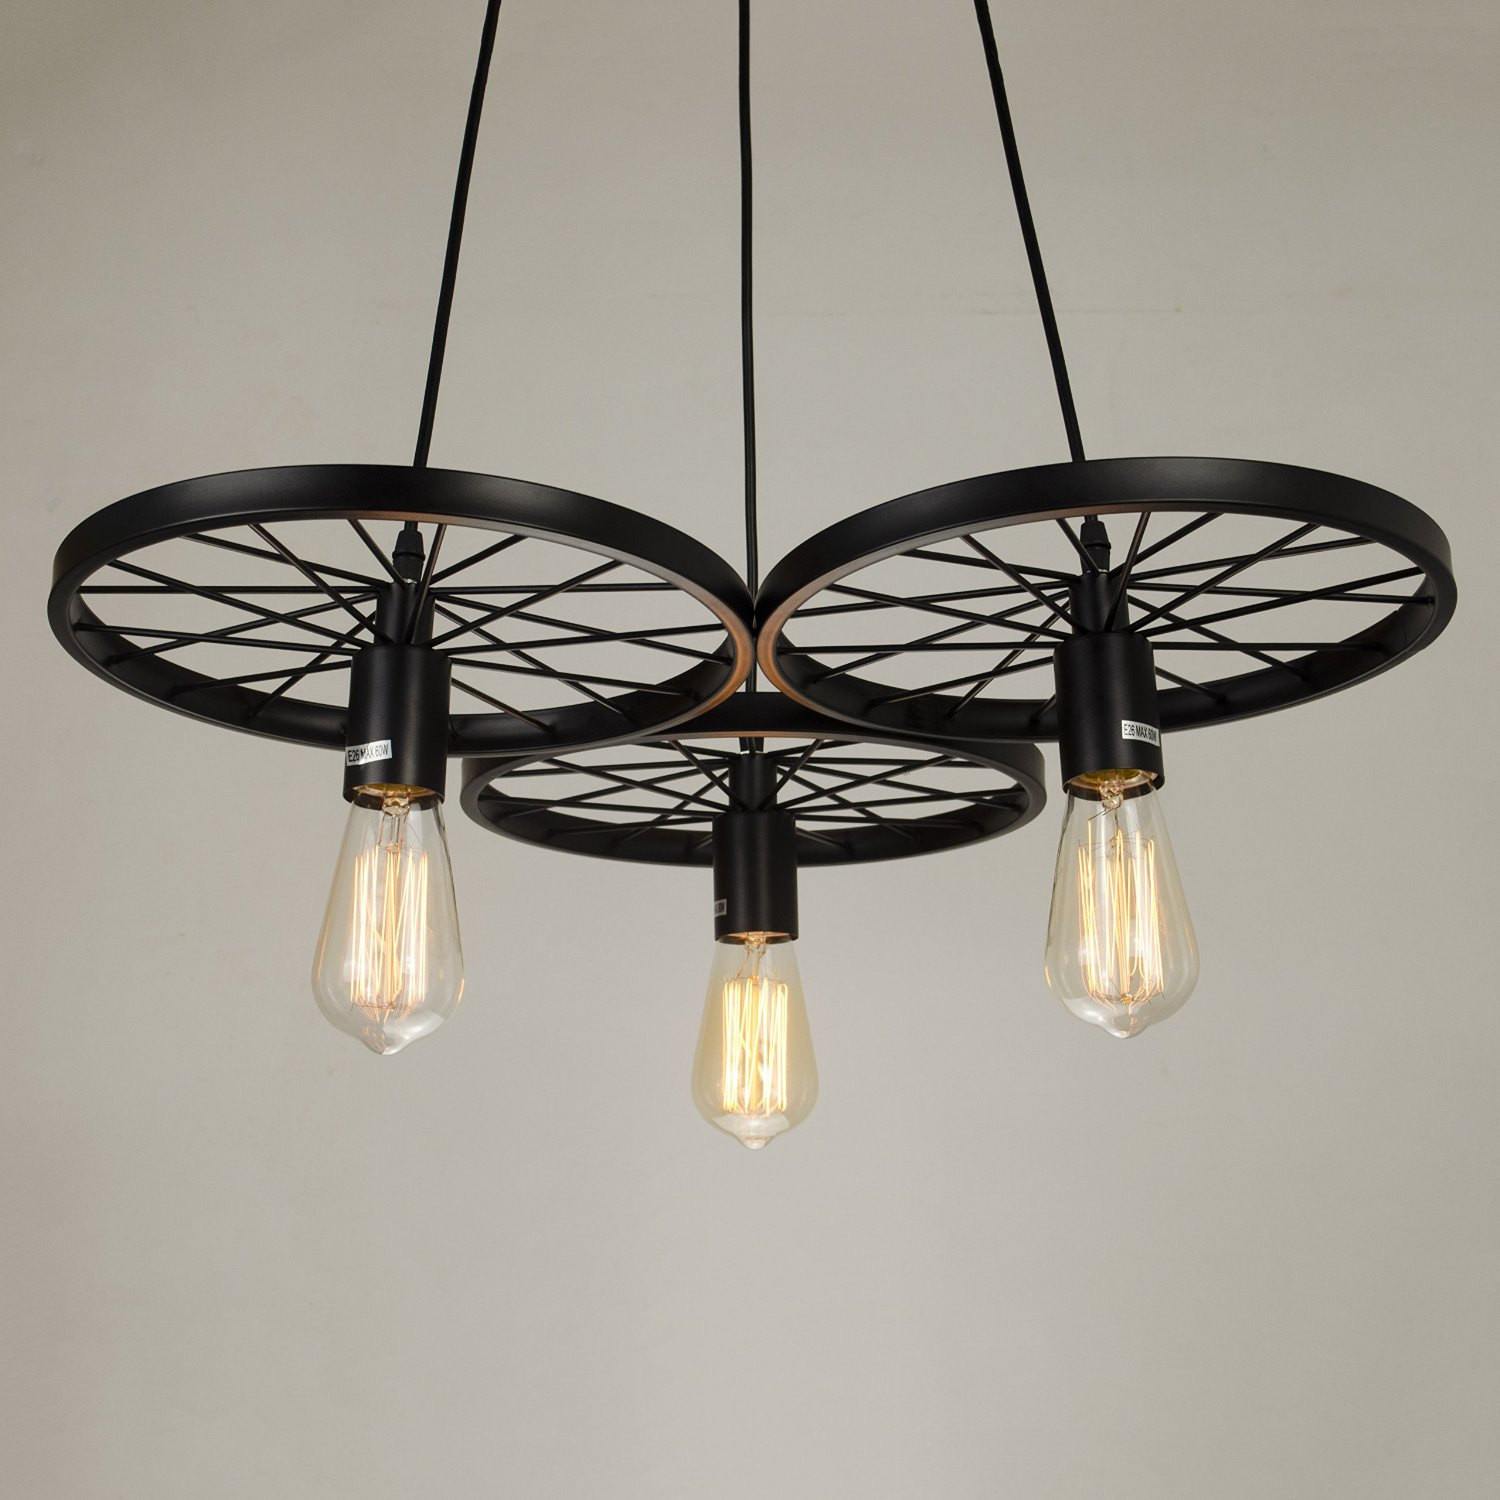 Edison Kitchen Lights
 Industrial style pendant light 3 edison bulbs chandelier